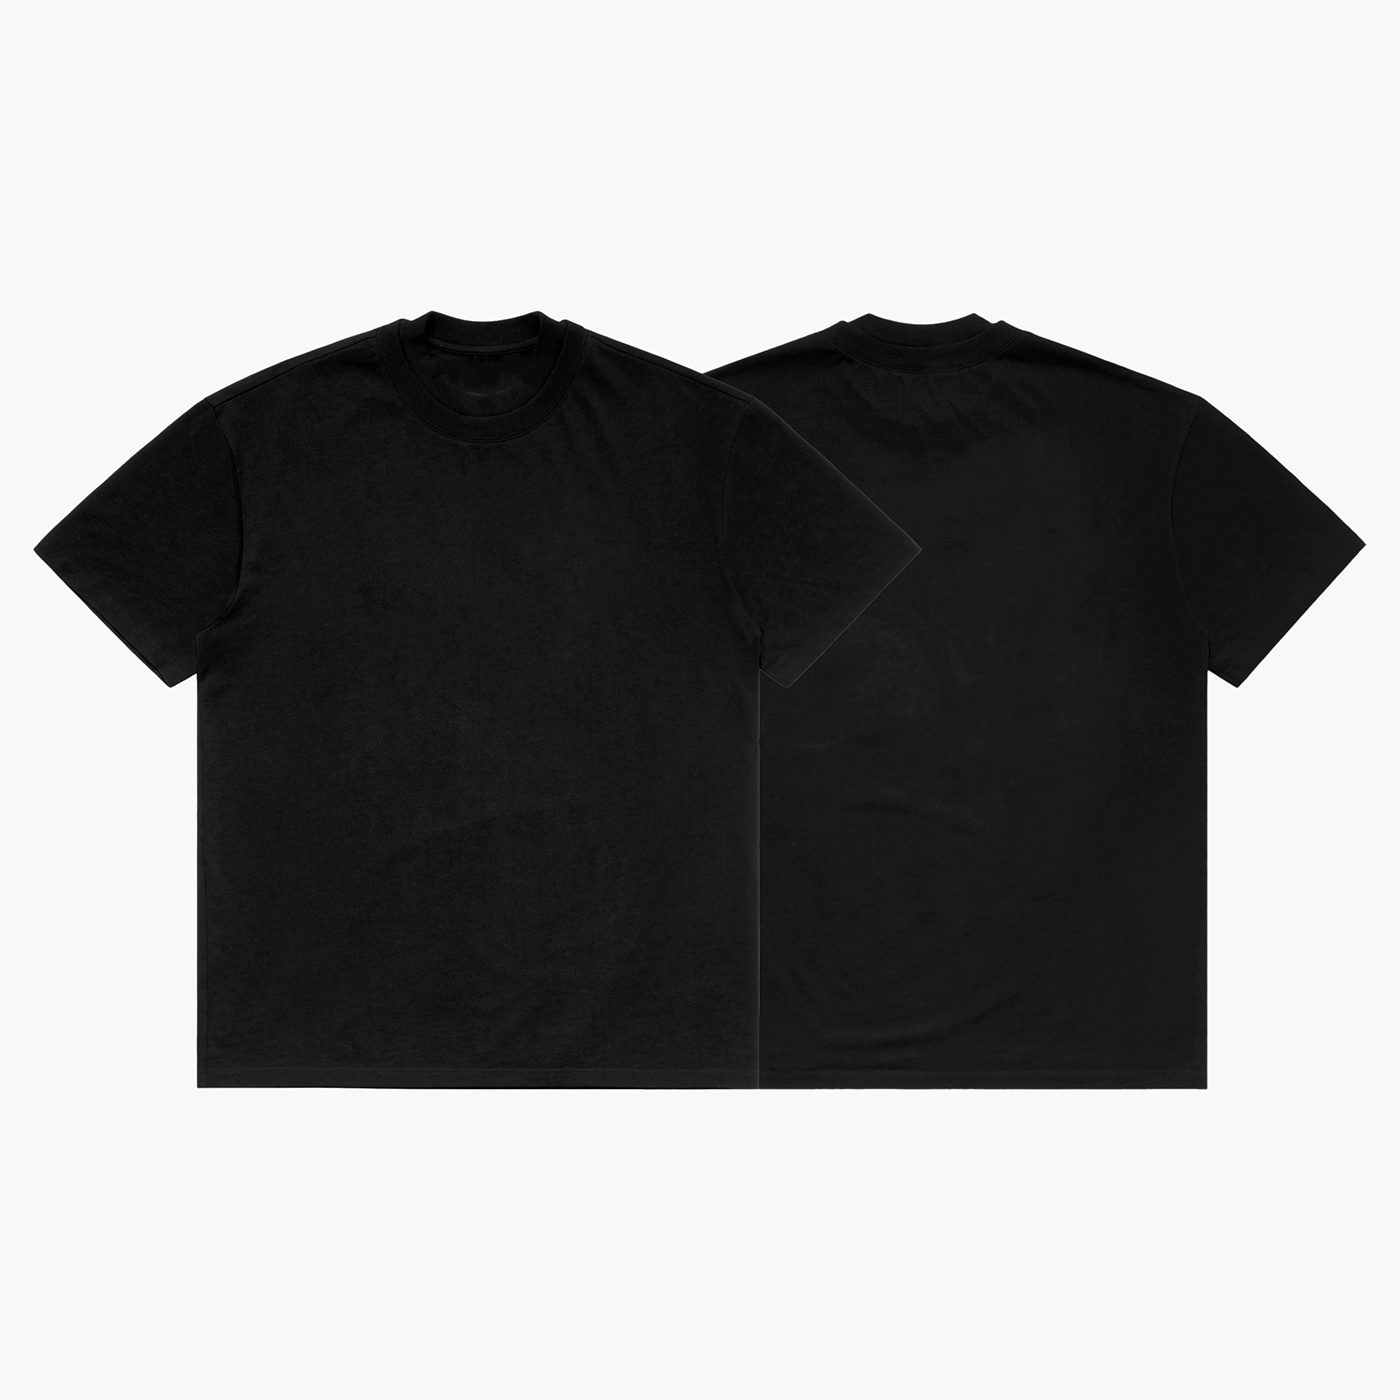 ACTIVE SHIRT t-shirt Tshirt Design Clothing fashion design Mockup t-shirt mockup free mock-up